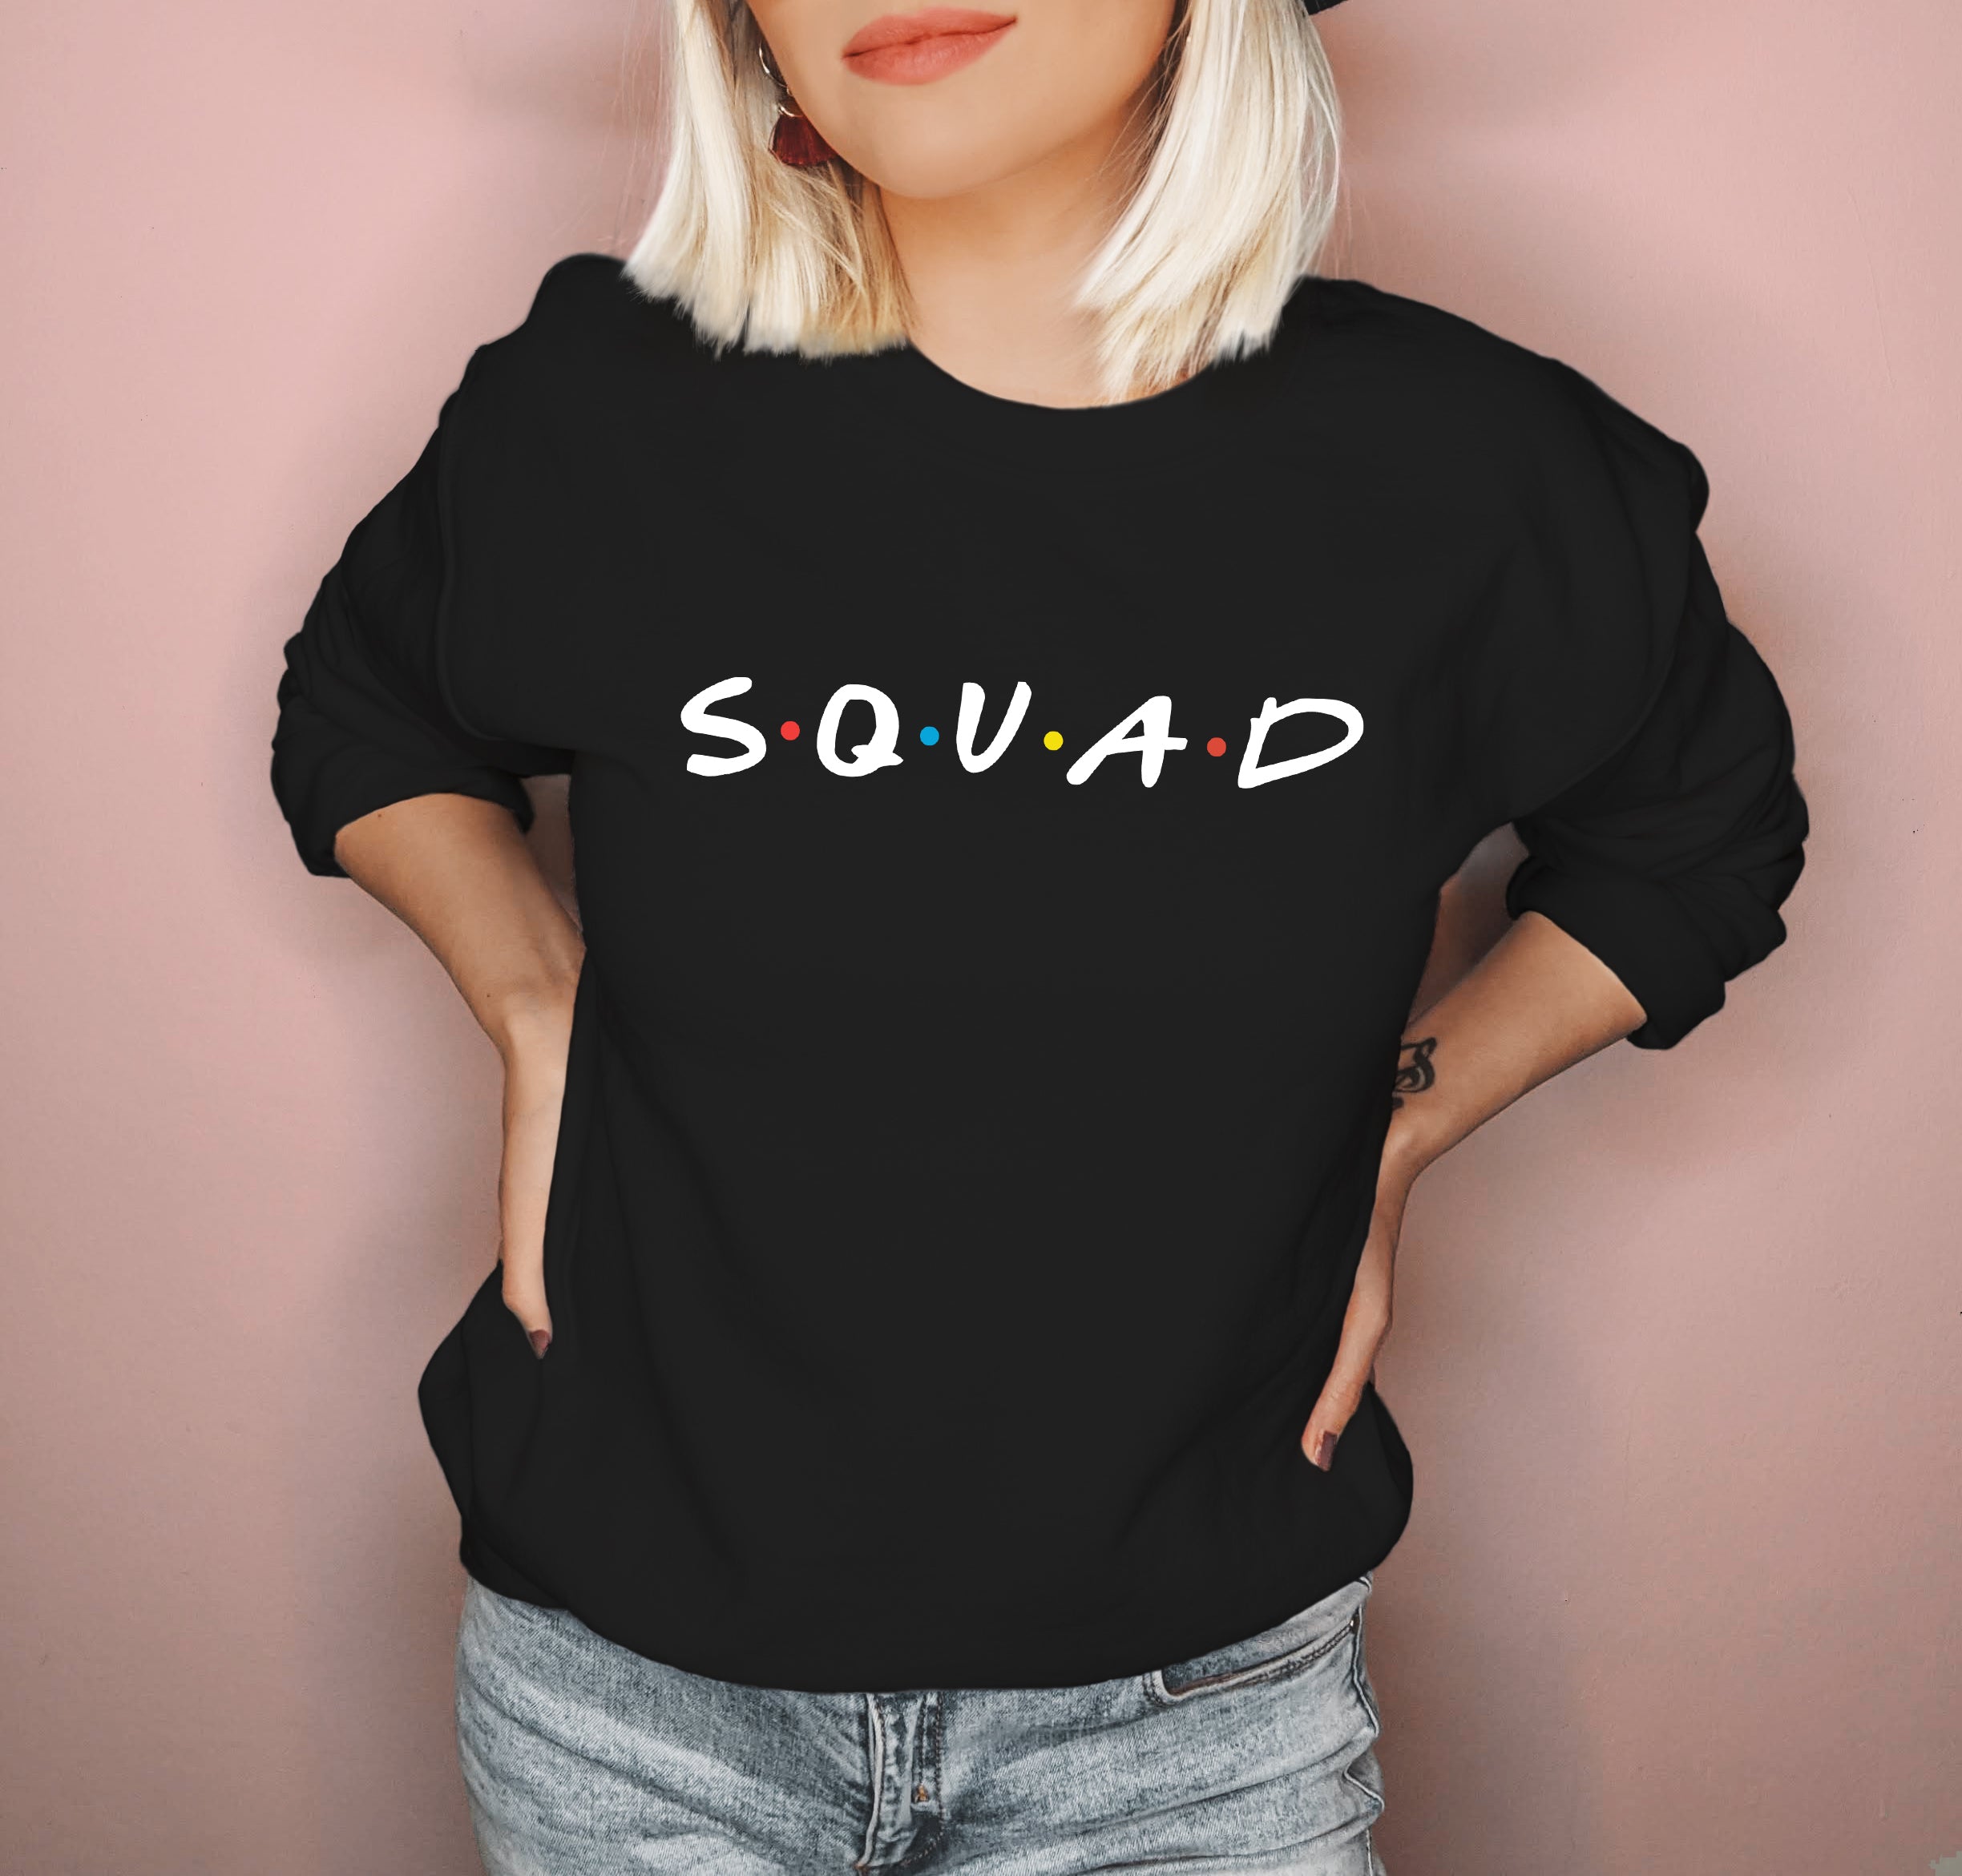 Black sweatshirt that says squad in friends font - HighCiti